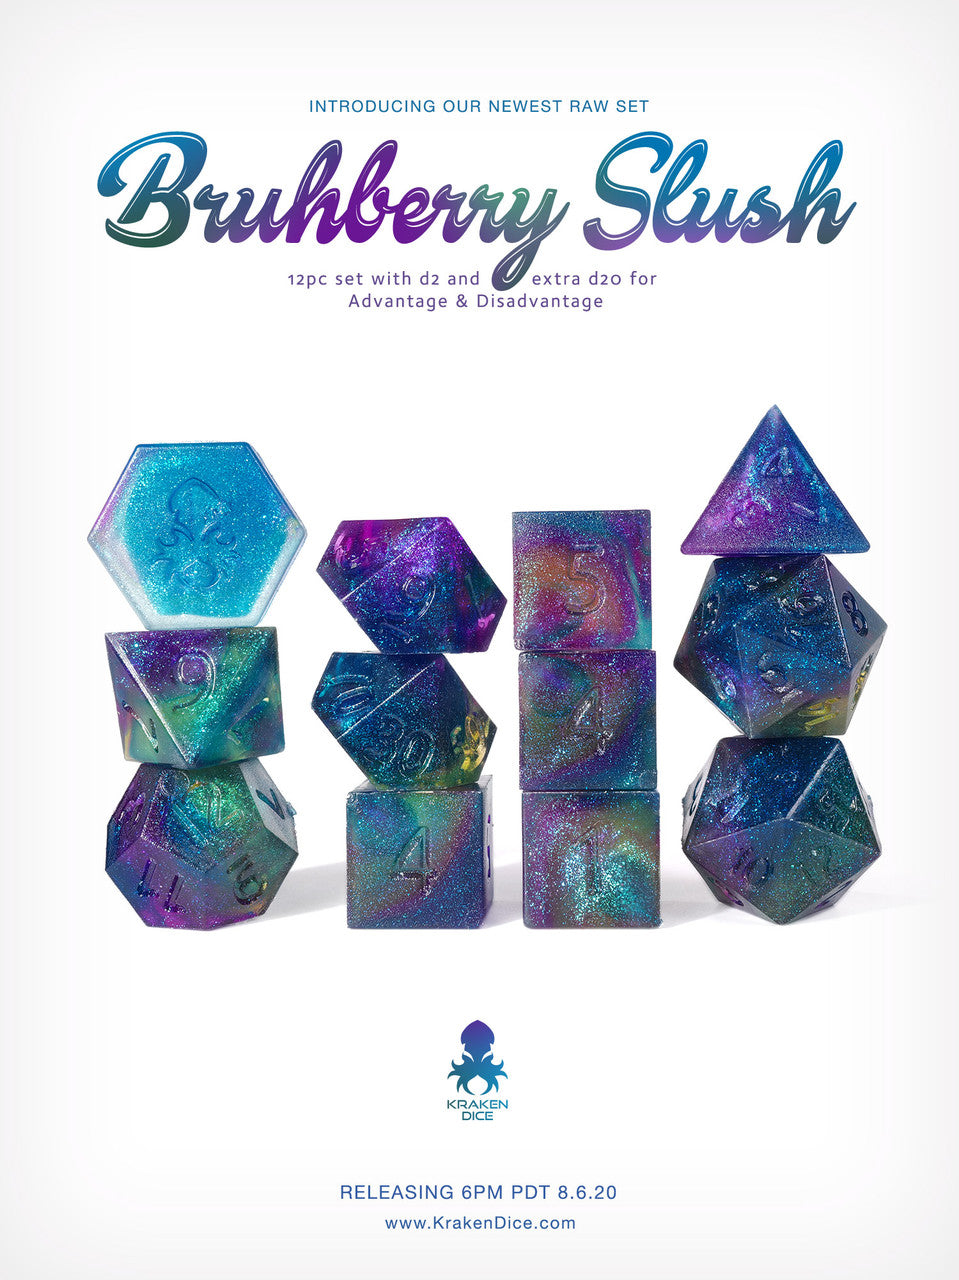 Kraken's RAW Bruhberry Slush Rock Candy 12pc Polyhedral Dice Set